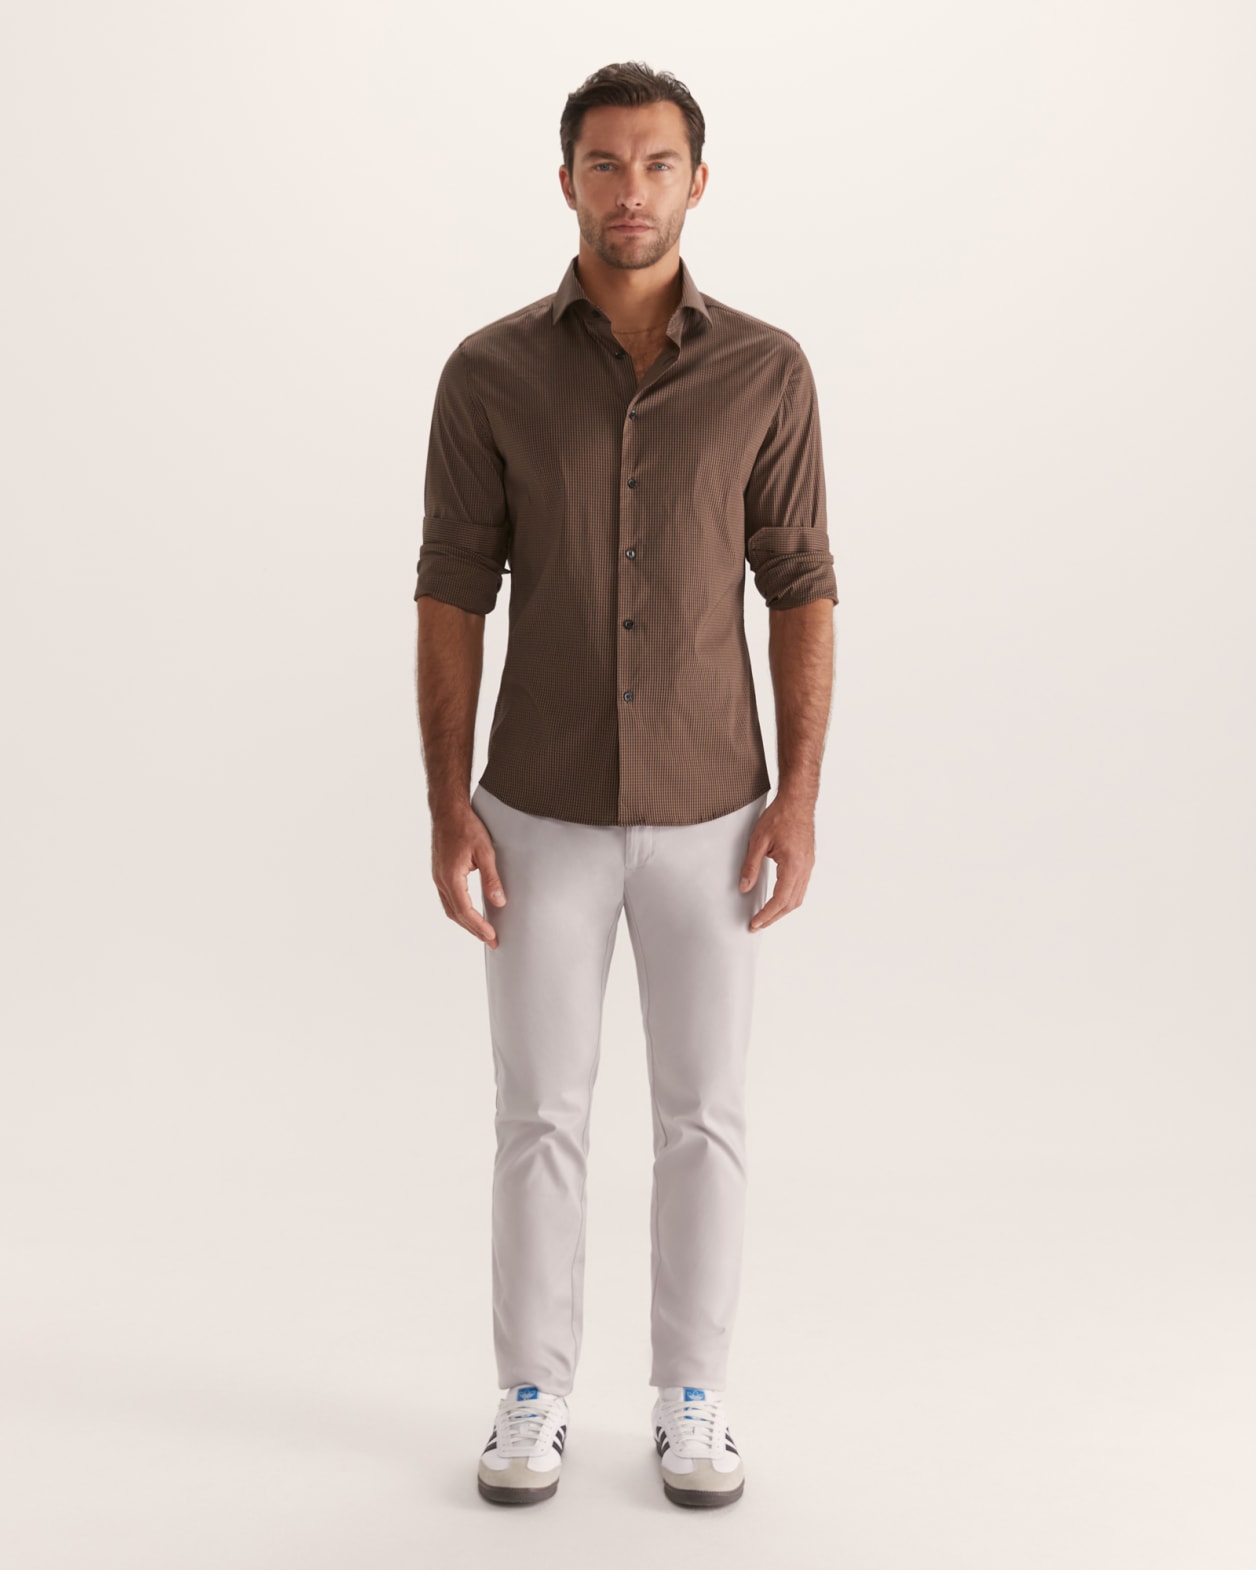 Turrell Long Sleeve Slim Check Shirt in CHOCOLATE